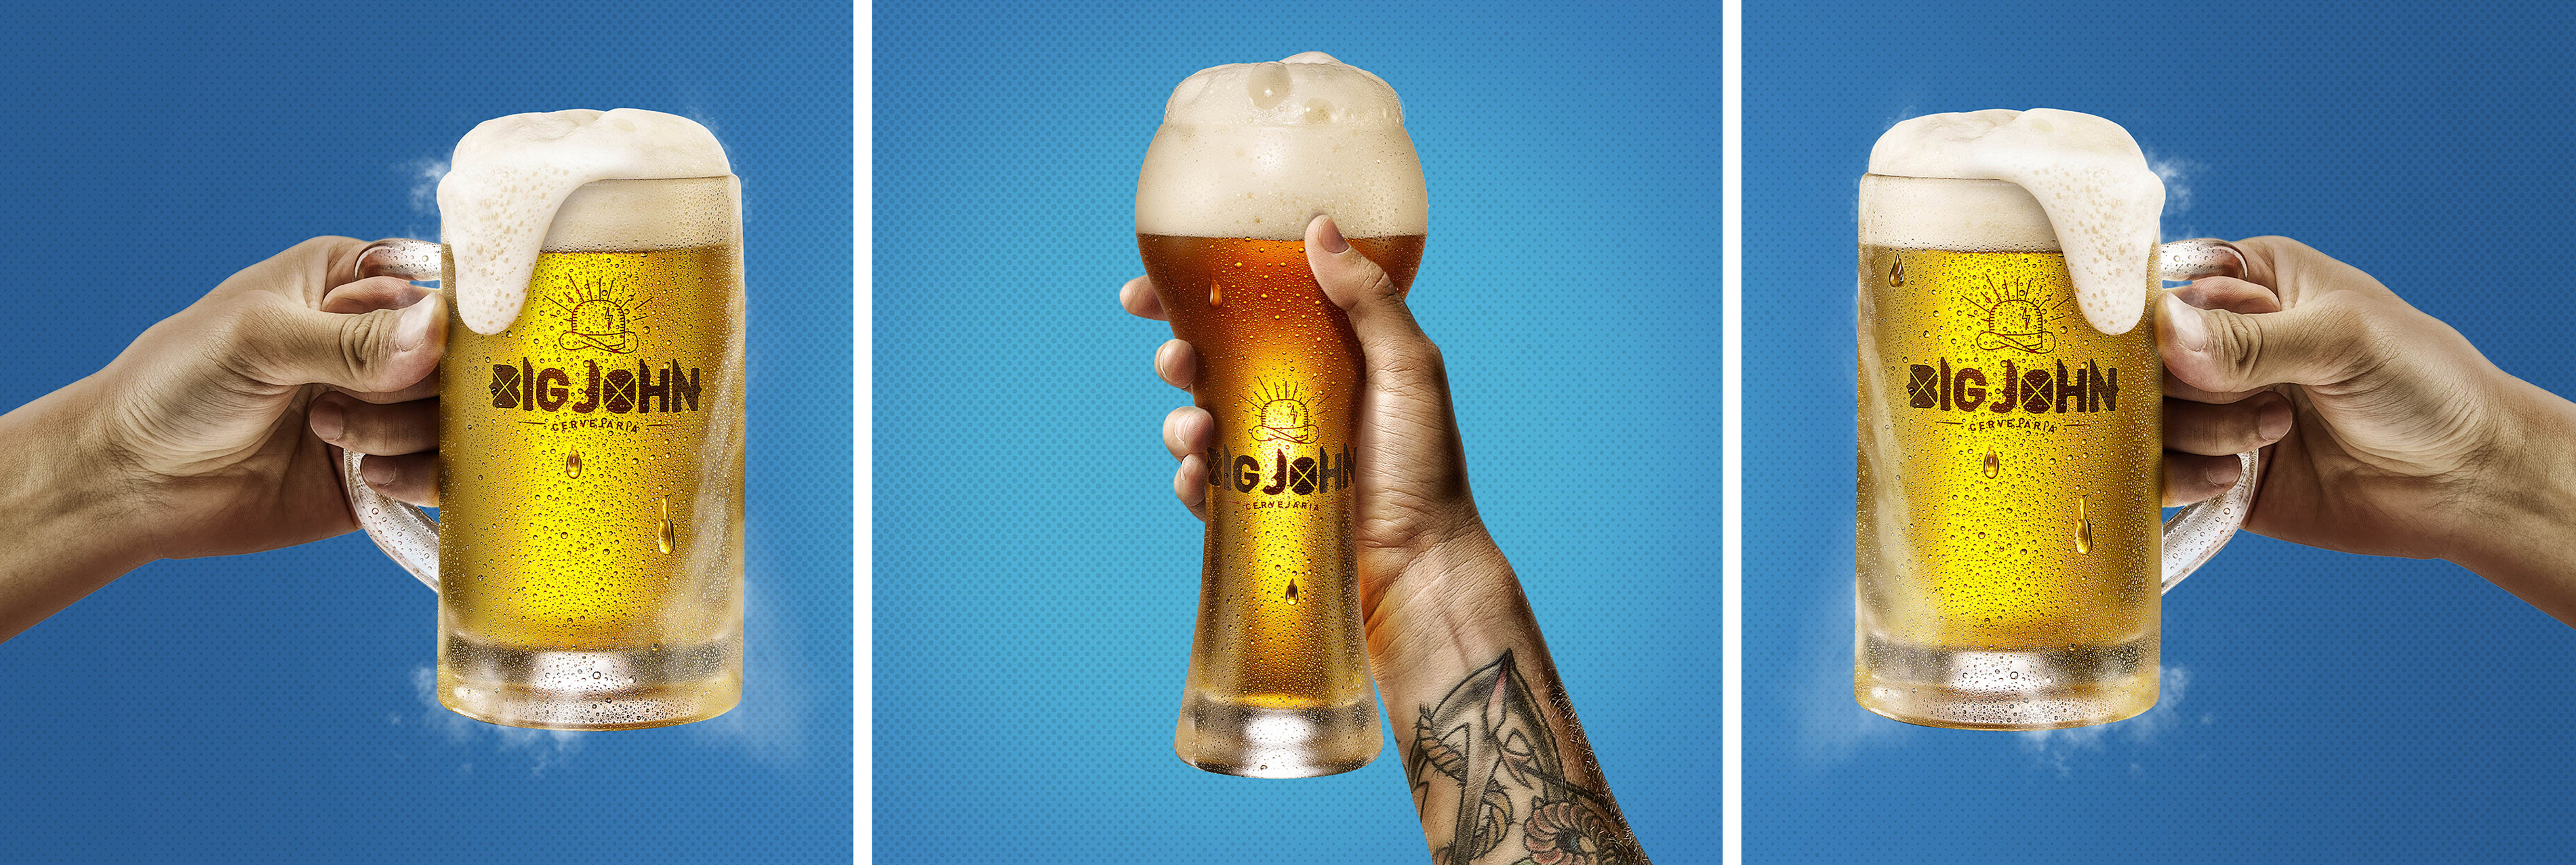 Big John Cervejaria - Cerveja Artesanal - Beba Local - Chopp - Chope - Beer